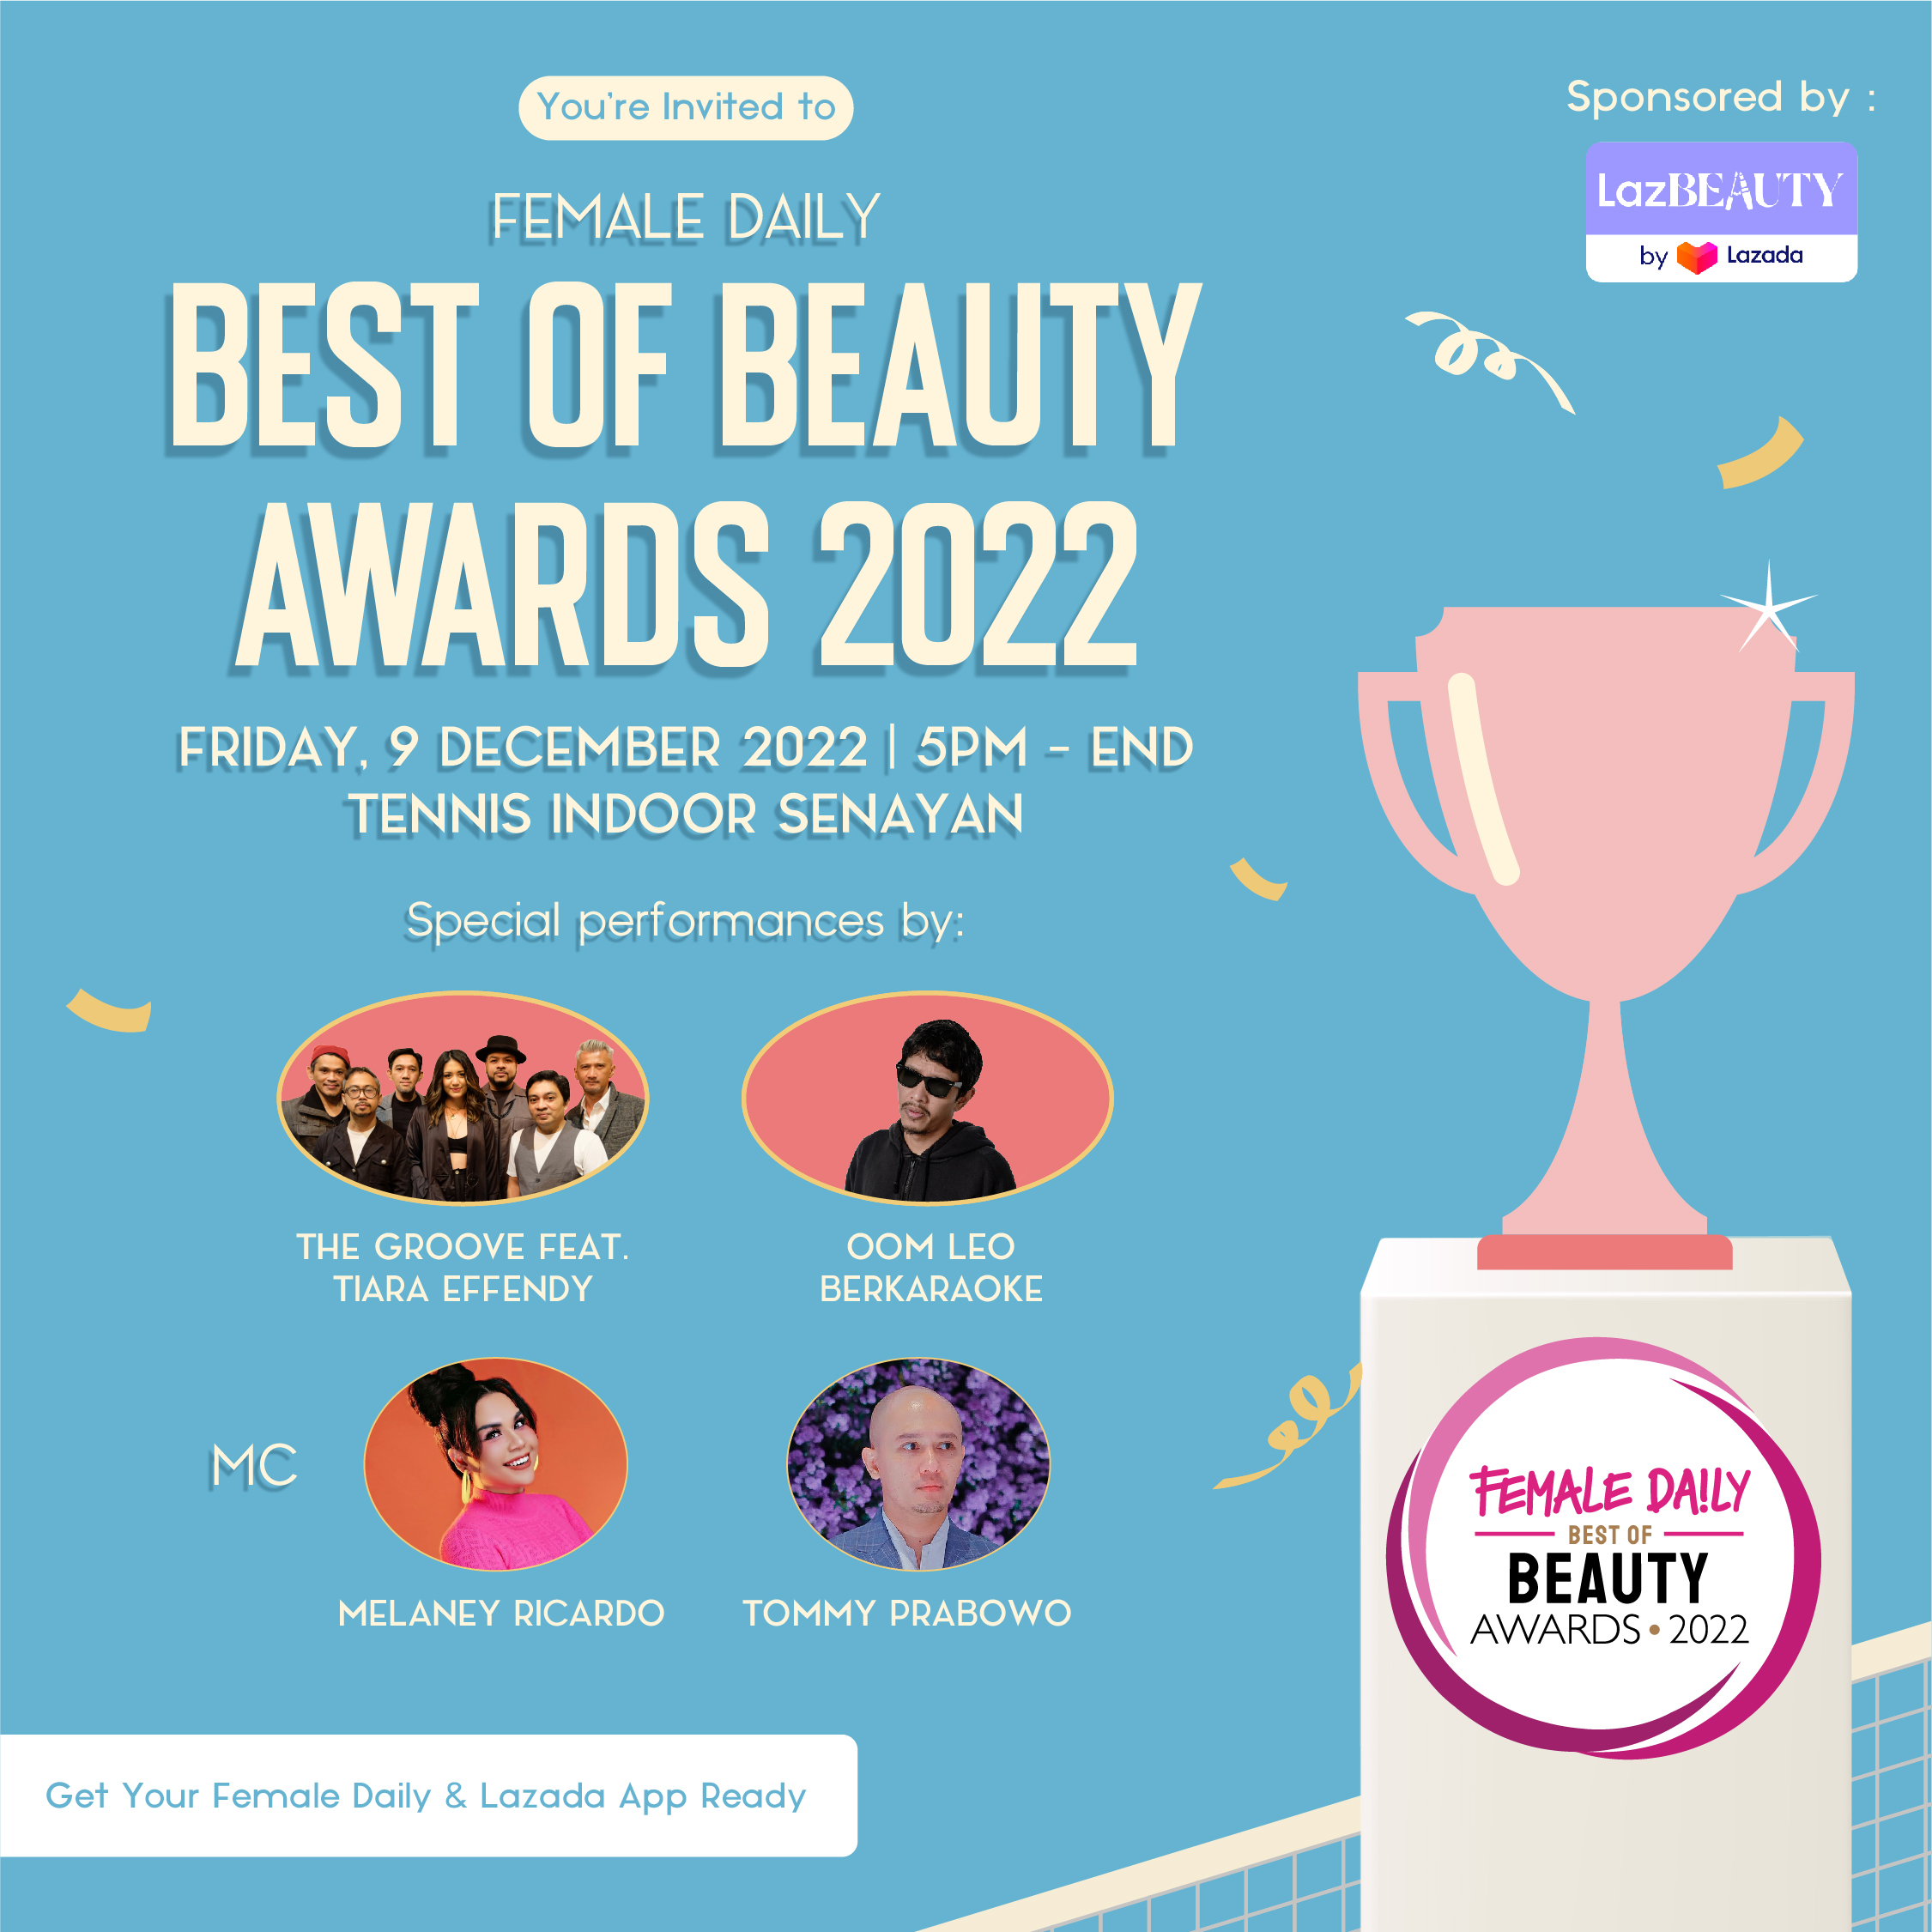 awarding night Female Daily Best of Beauty Awards 2022